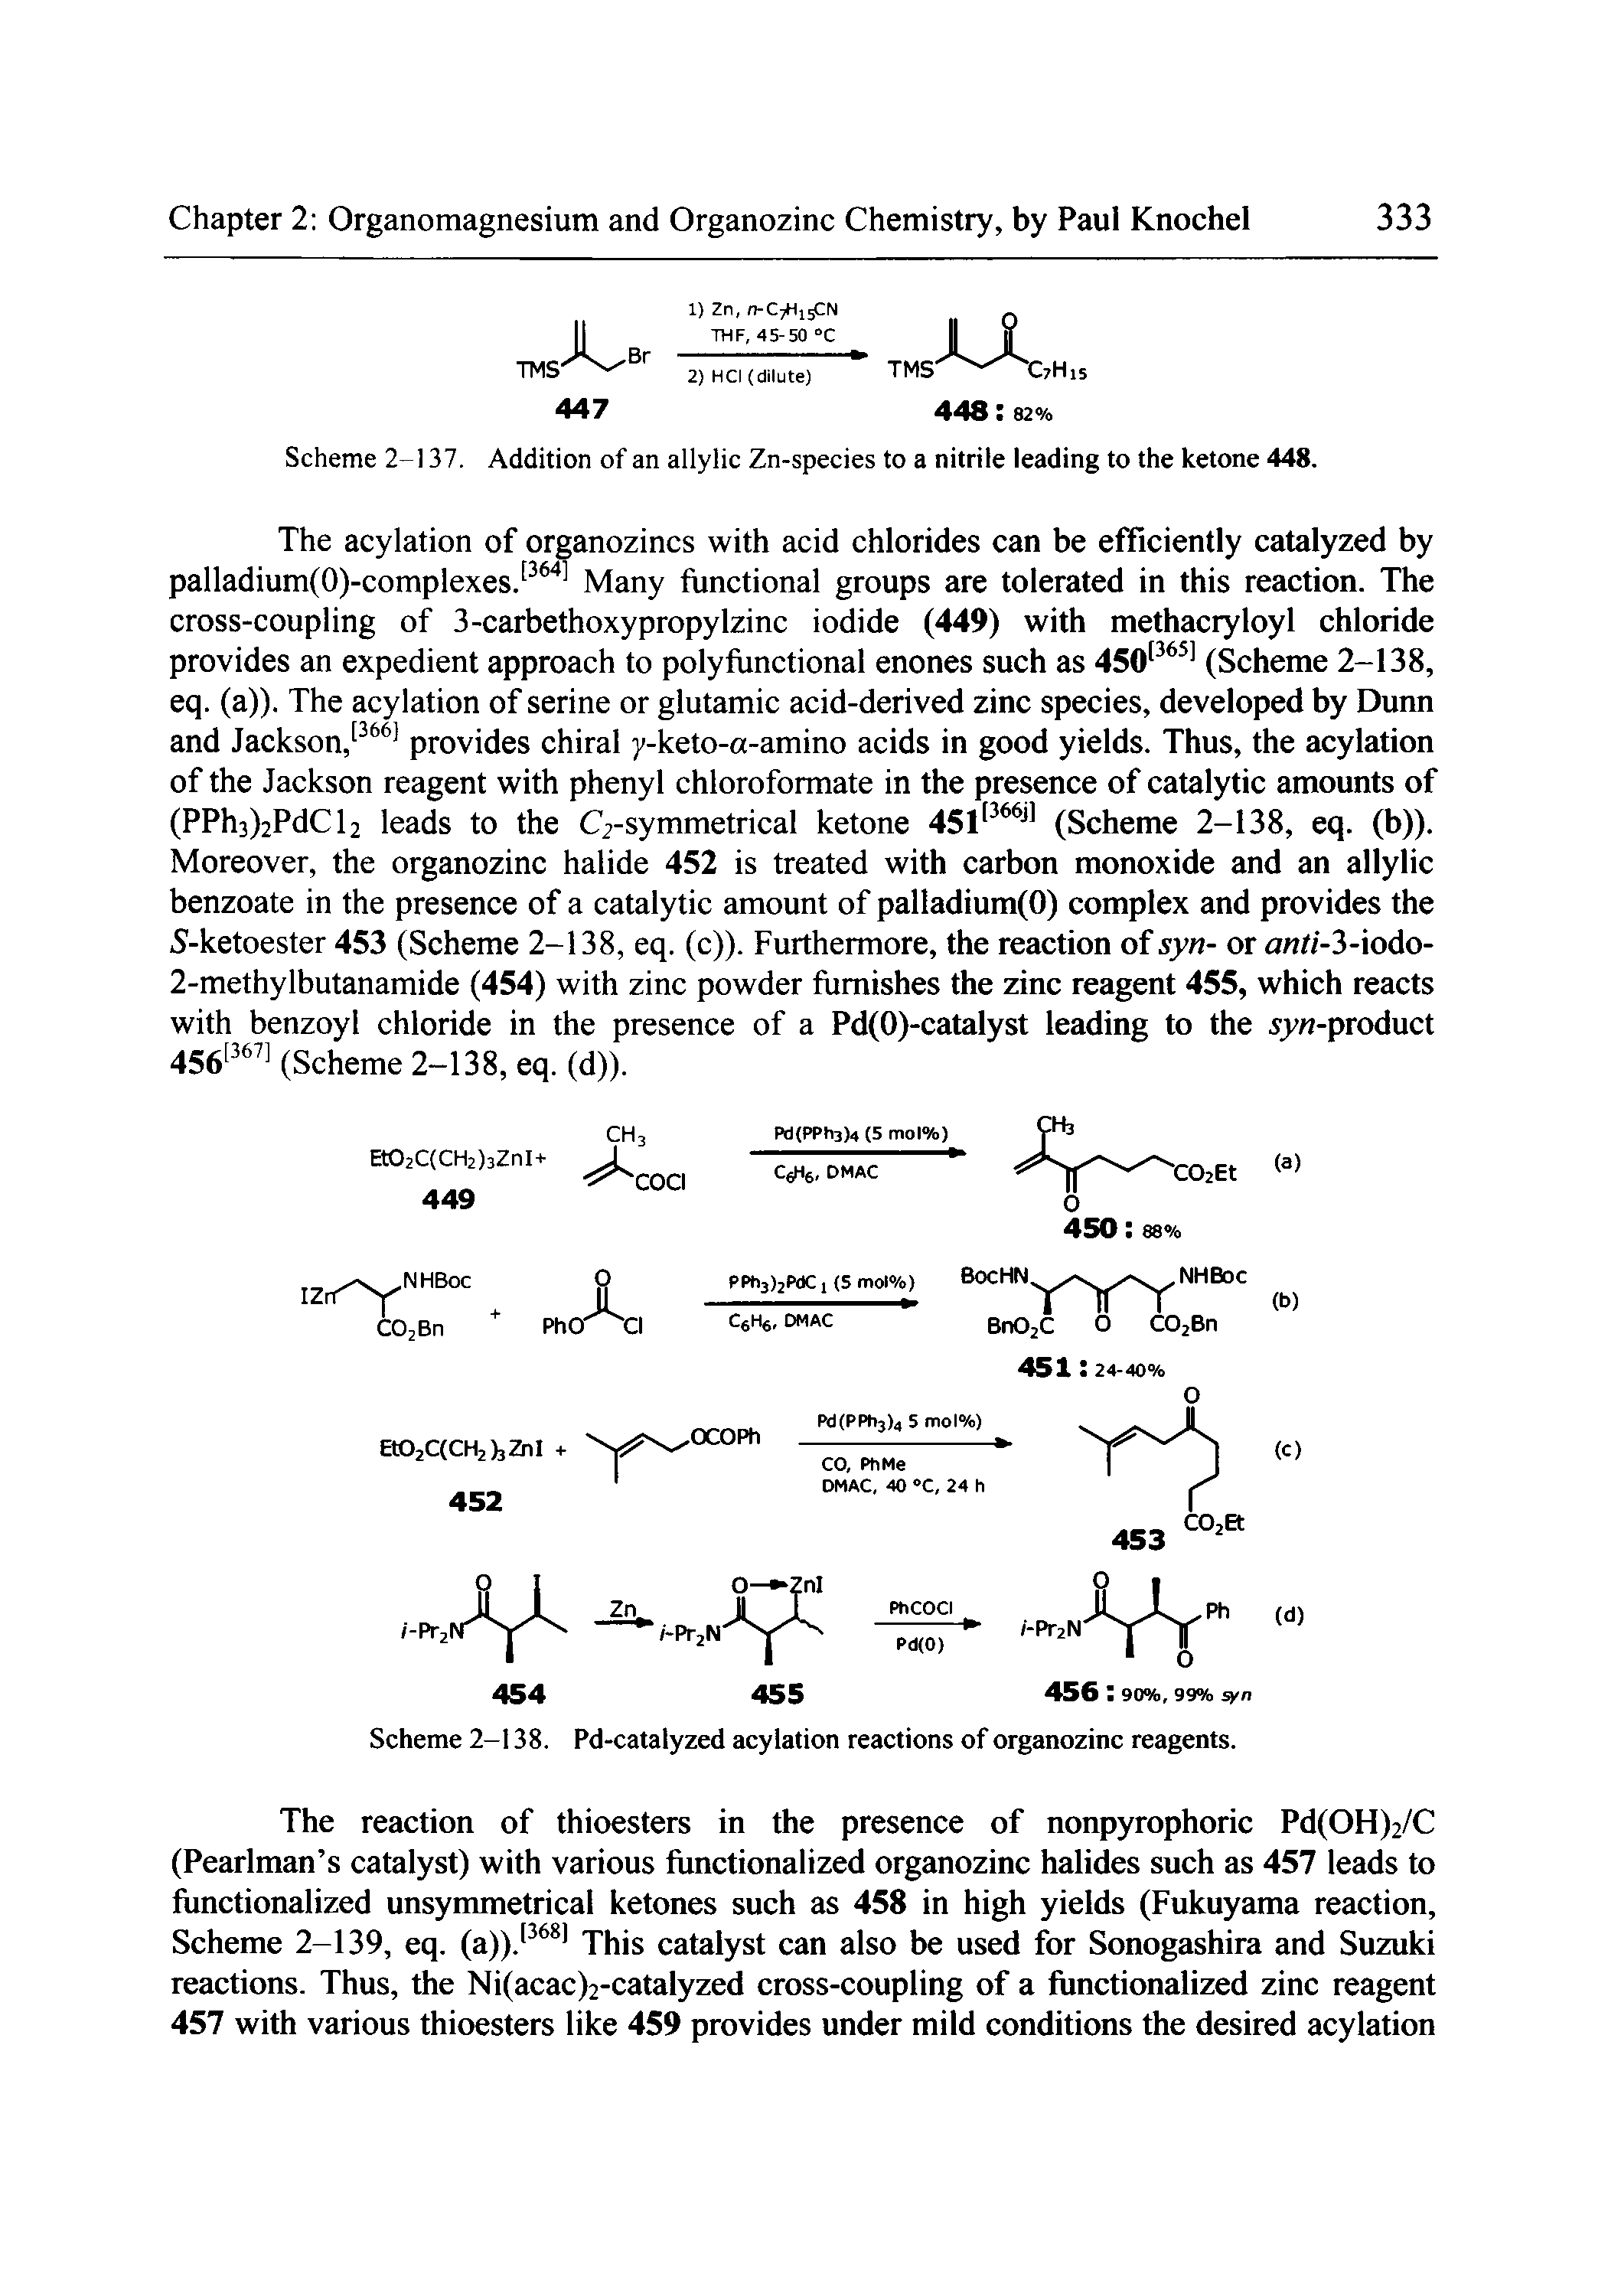 Scheme 2-138. Pd-catalyzed acylation reactions of organozinc reagents.